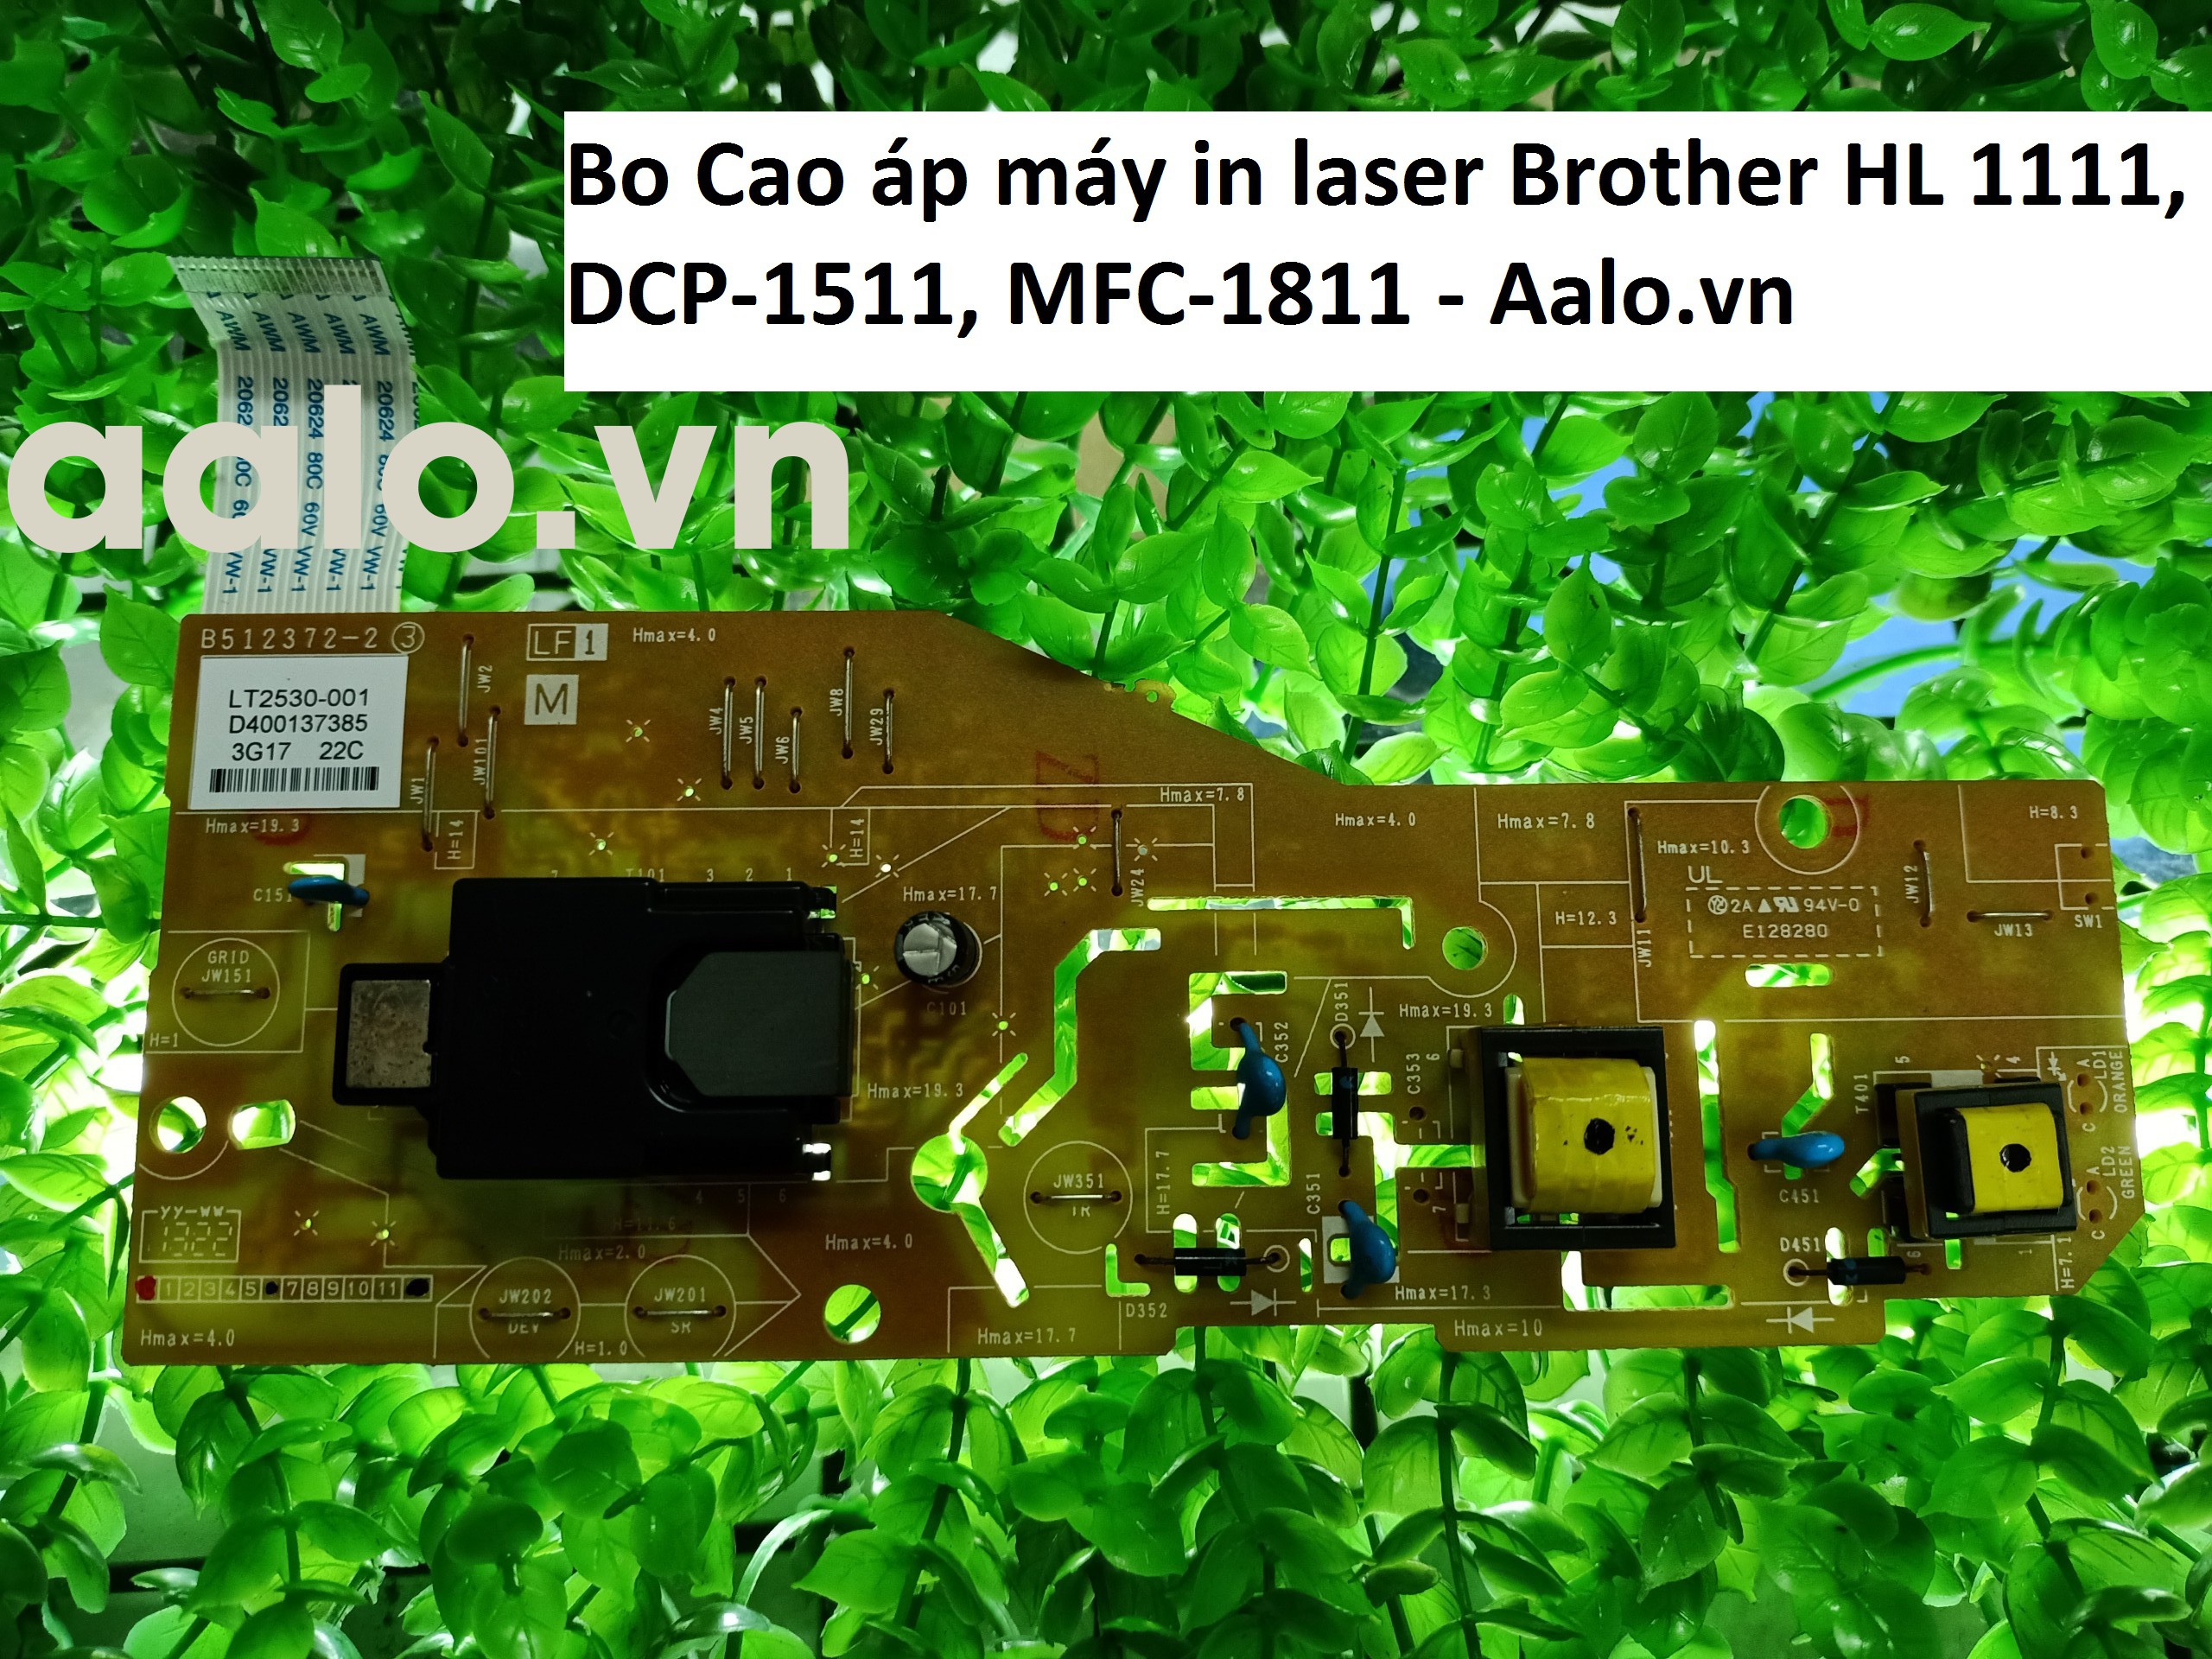 Bo Cao áp máy in laser Brother HL 1111, DCP-1511, MFC-1811